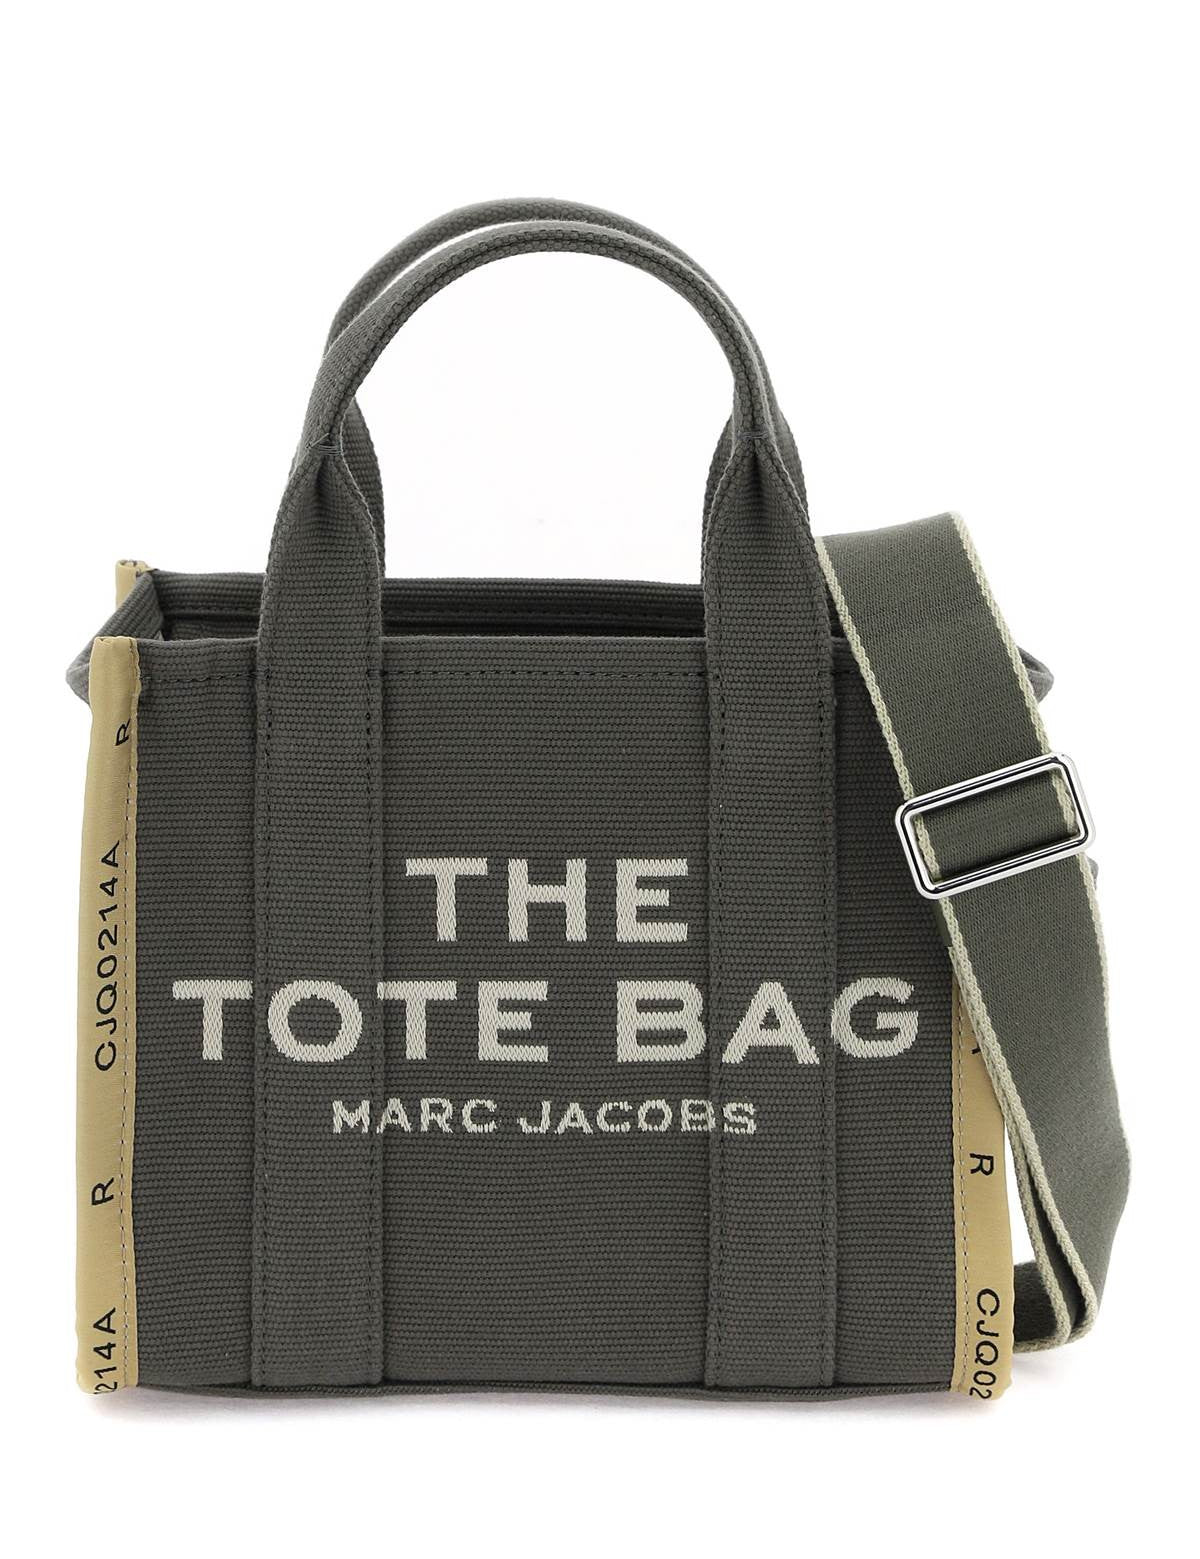 marc-jacobs-the-jacquard-small-tote-bag_f48f48c9-53e3-414a-a4d9-9cbb425dee3d.jpg